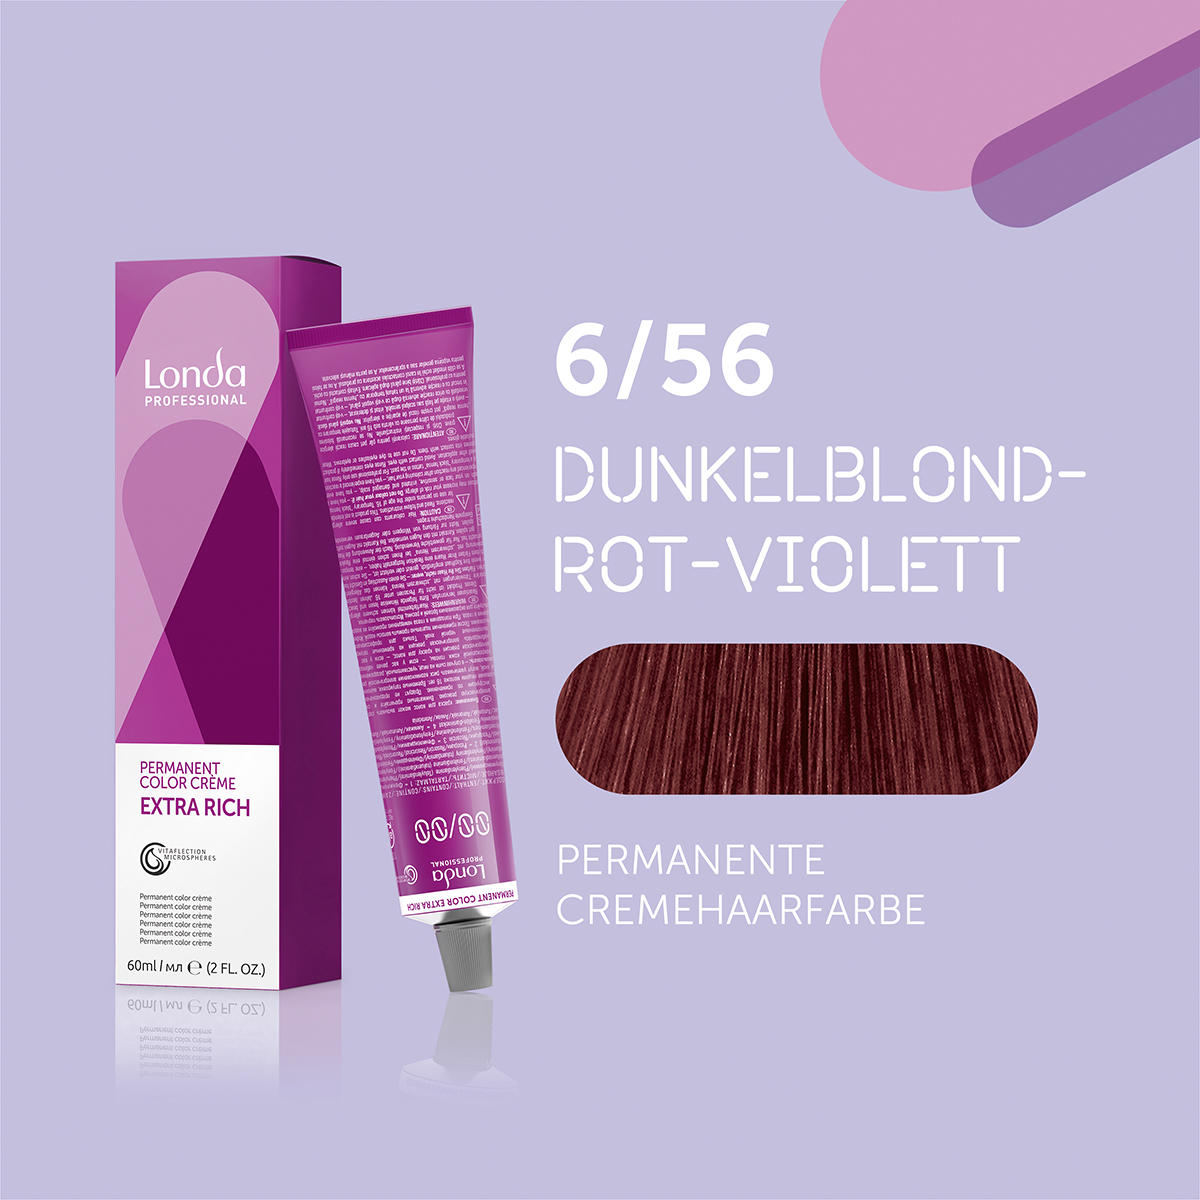 Londa Permanente Cremehaarfarbe Extra Rich 6/56 Dunkelblond Rot Violett, Tube 60 ml - 1